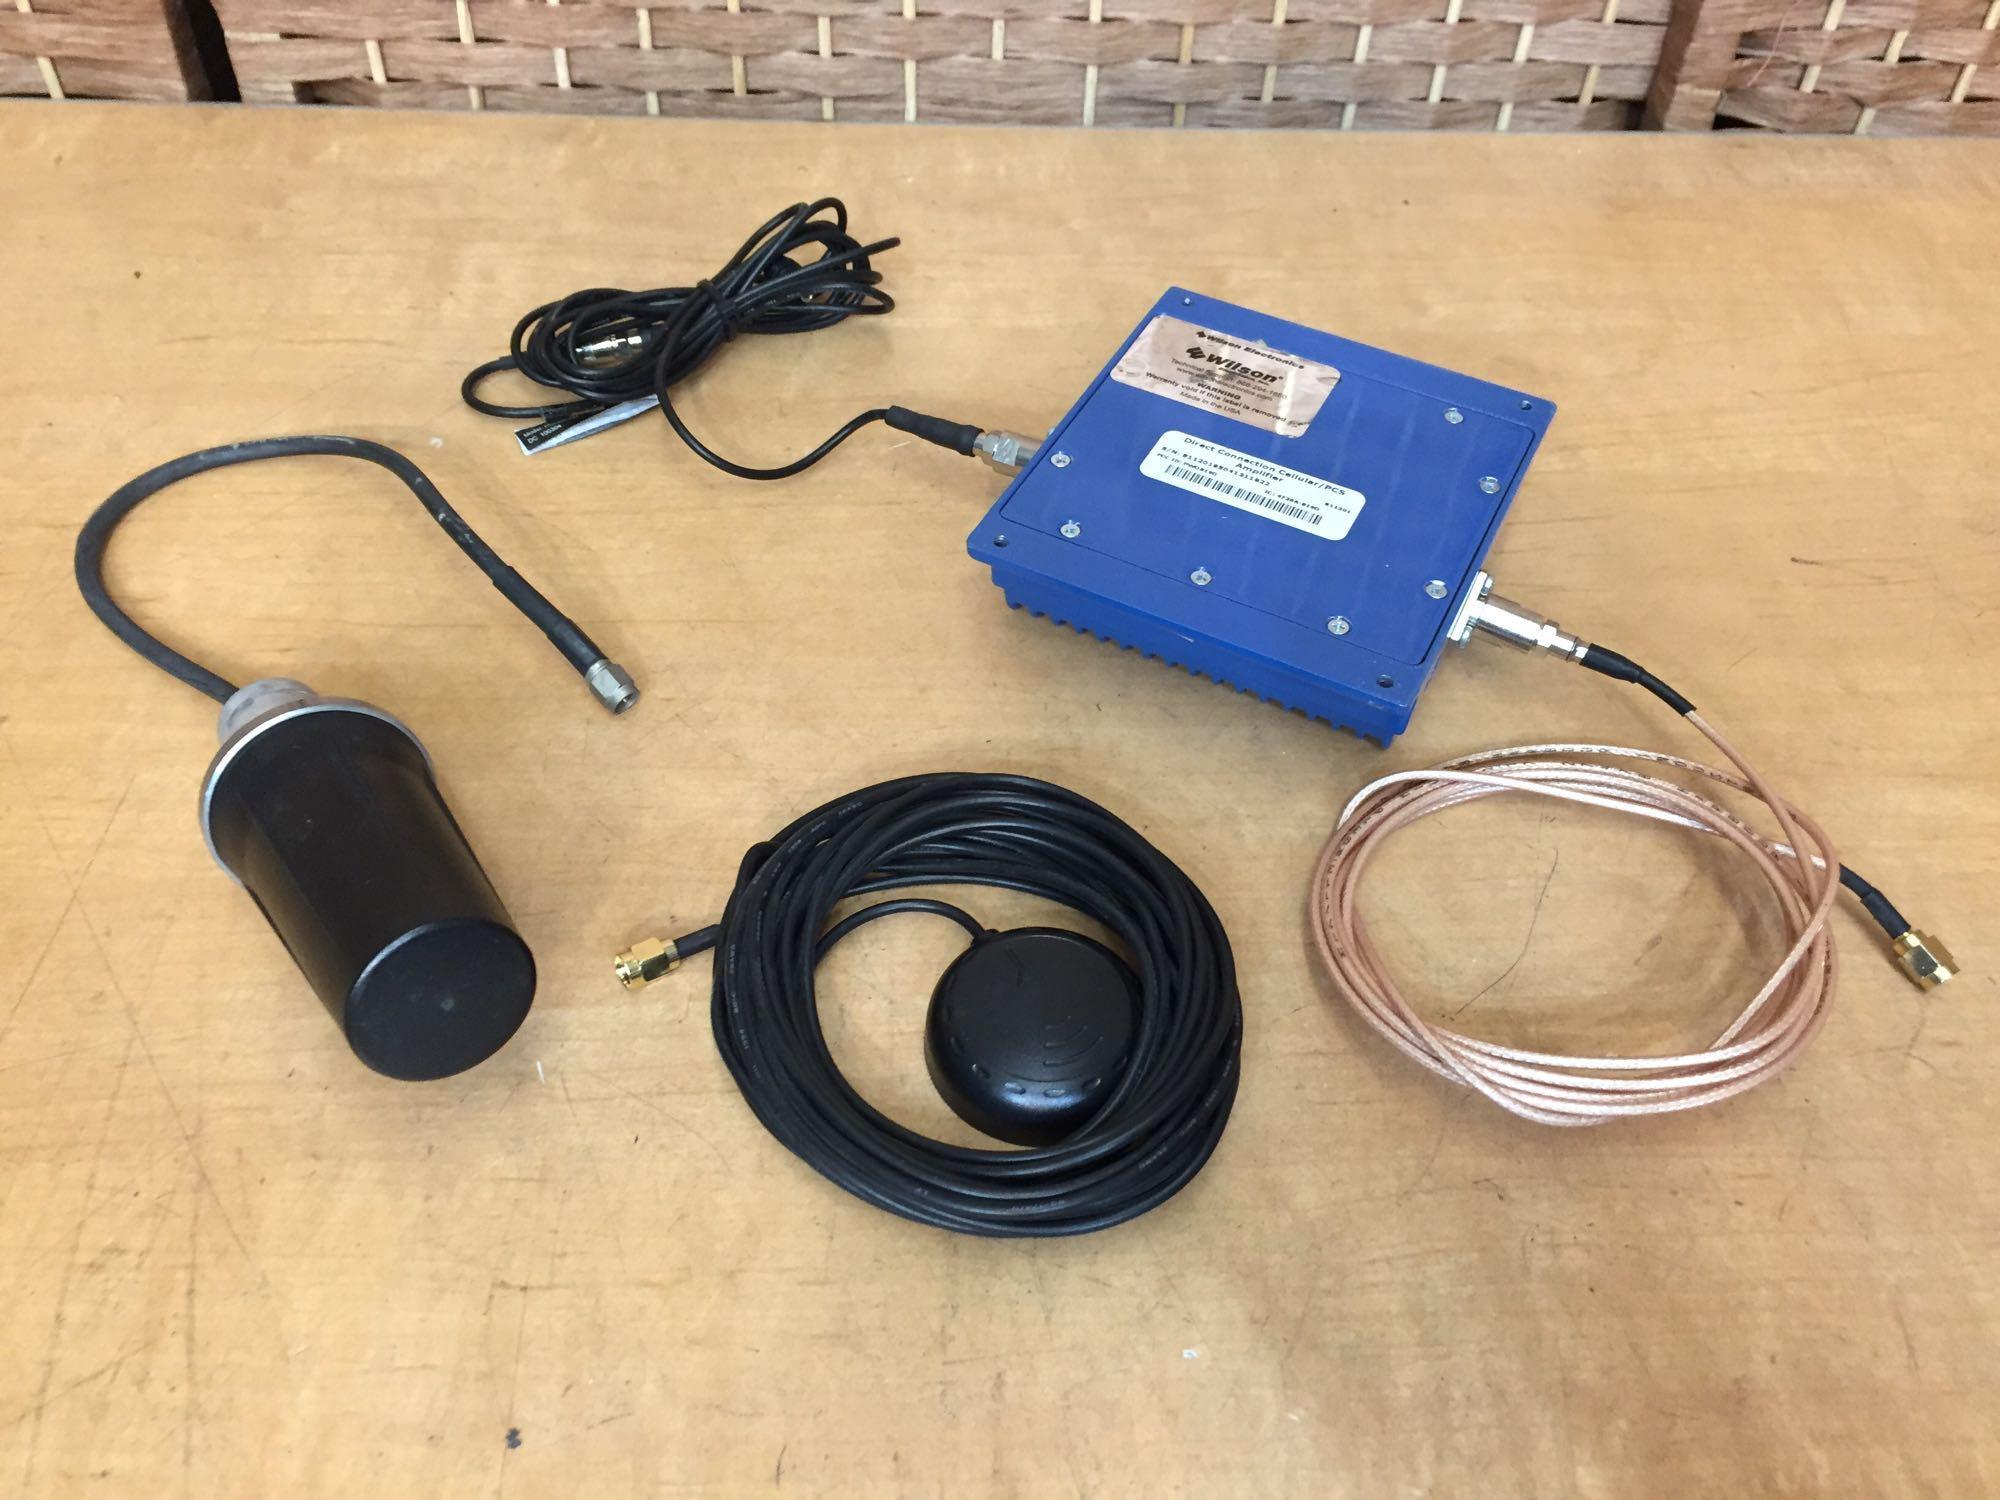 Wilson 811201 Direct Connection Cellular PCS Amplifier & GPS Antennas